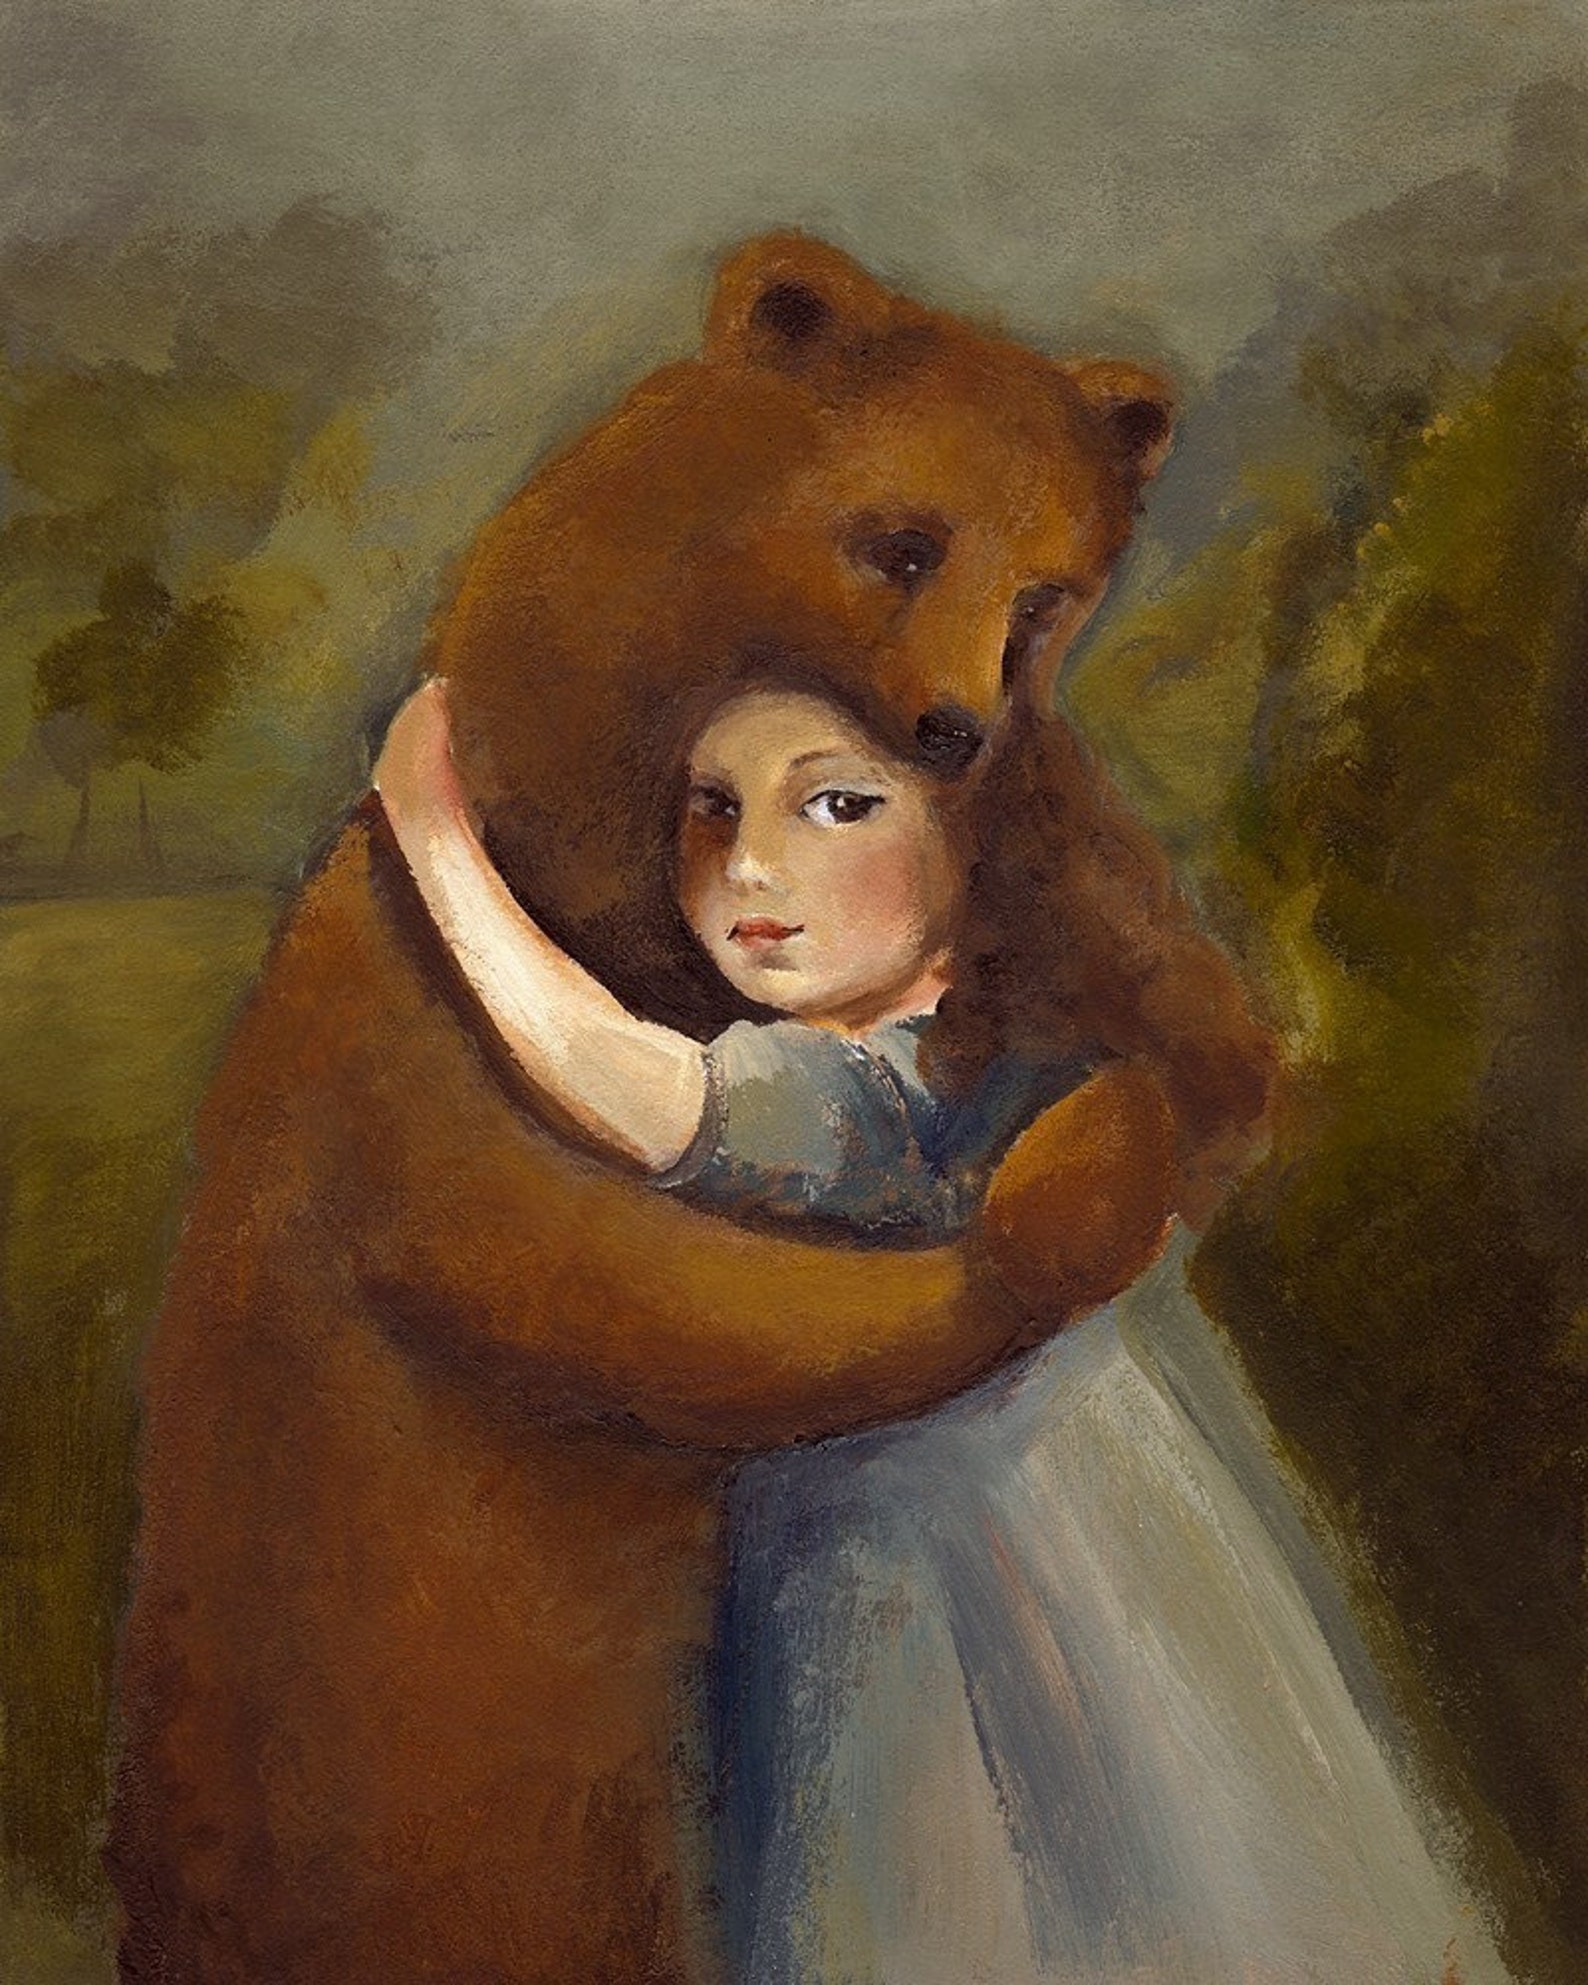 Мишка девочка картинка. Мишка обнимает. Девочка обнимает медведя. Медведь обнимает. Девочка и медведь.